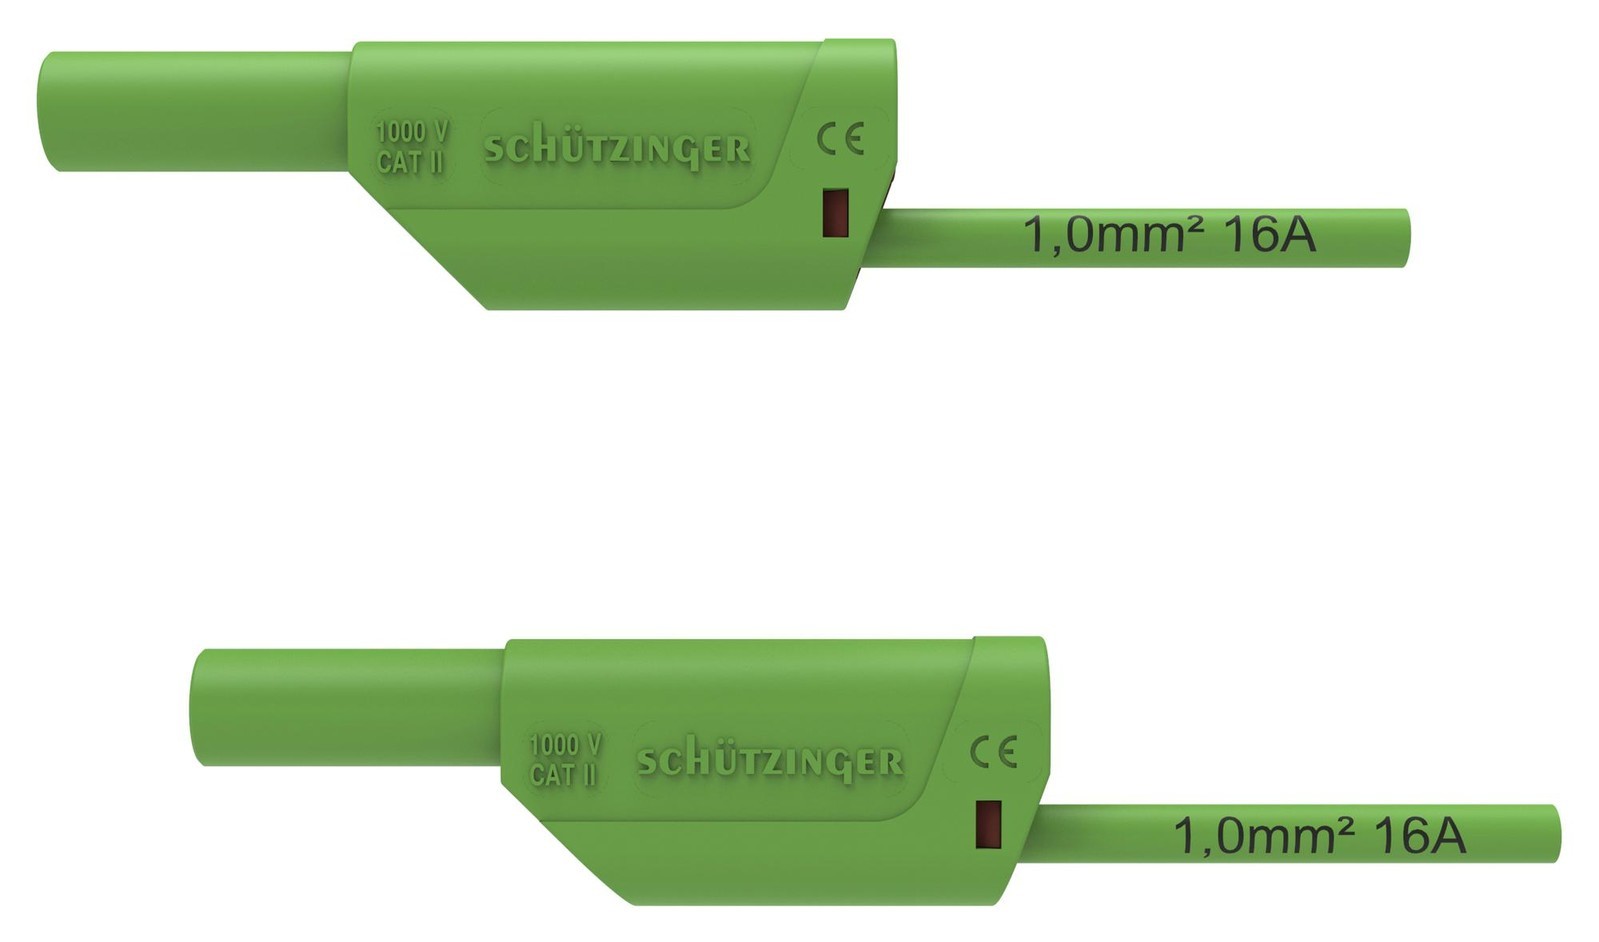 Schutzinger Di Vsfk 8500 / 1 / 100 / Gn 4mm Banana Plug-Sq, Shrouded, Green, 1M